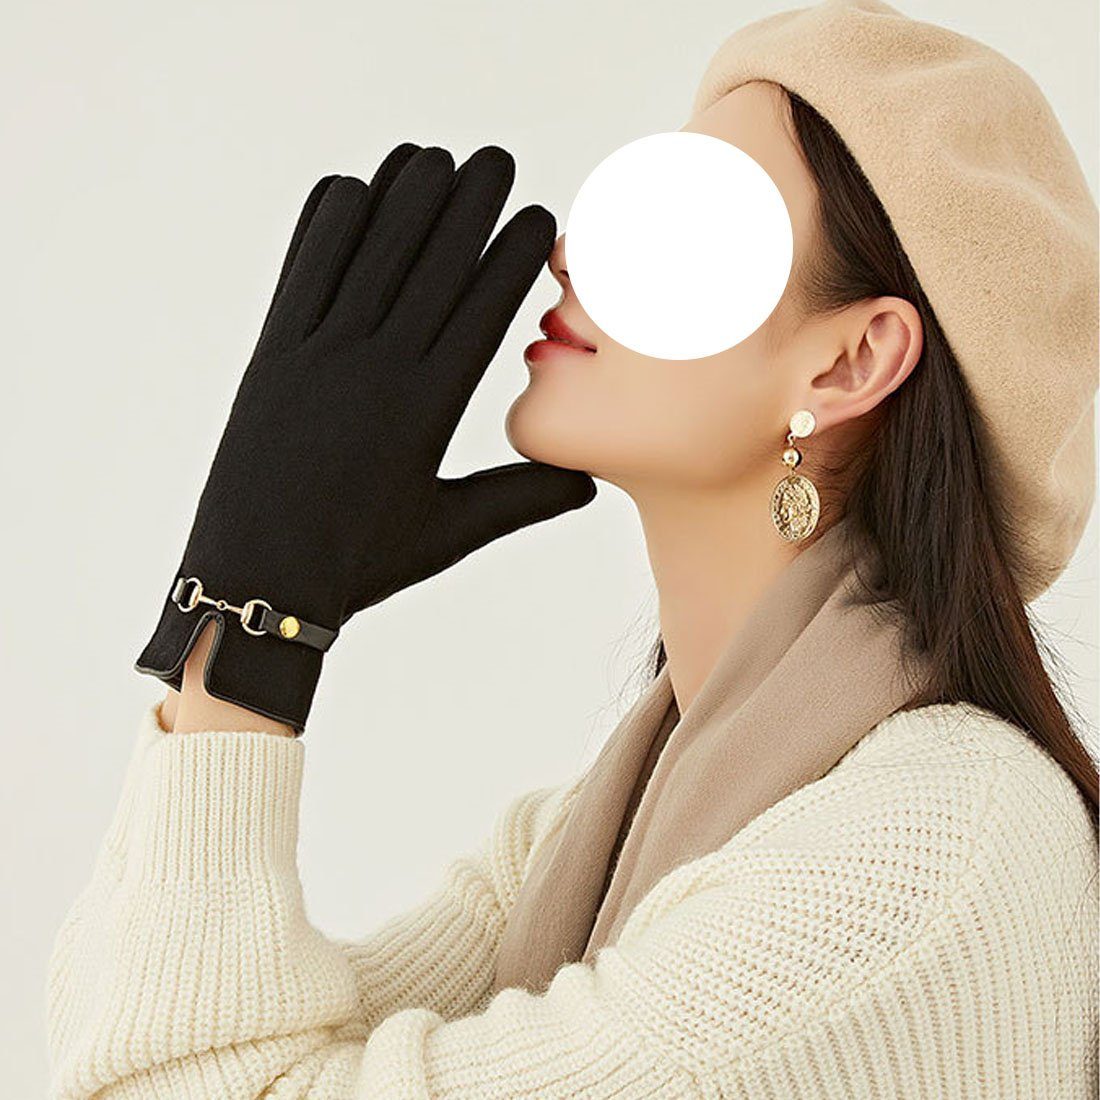 DÖRÖY Fleecehandschuhe Warme Handschuhe für Frauen mit Touchscreen, Faux Cashmere Handschuhe Schwarz